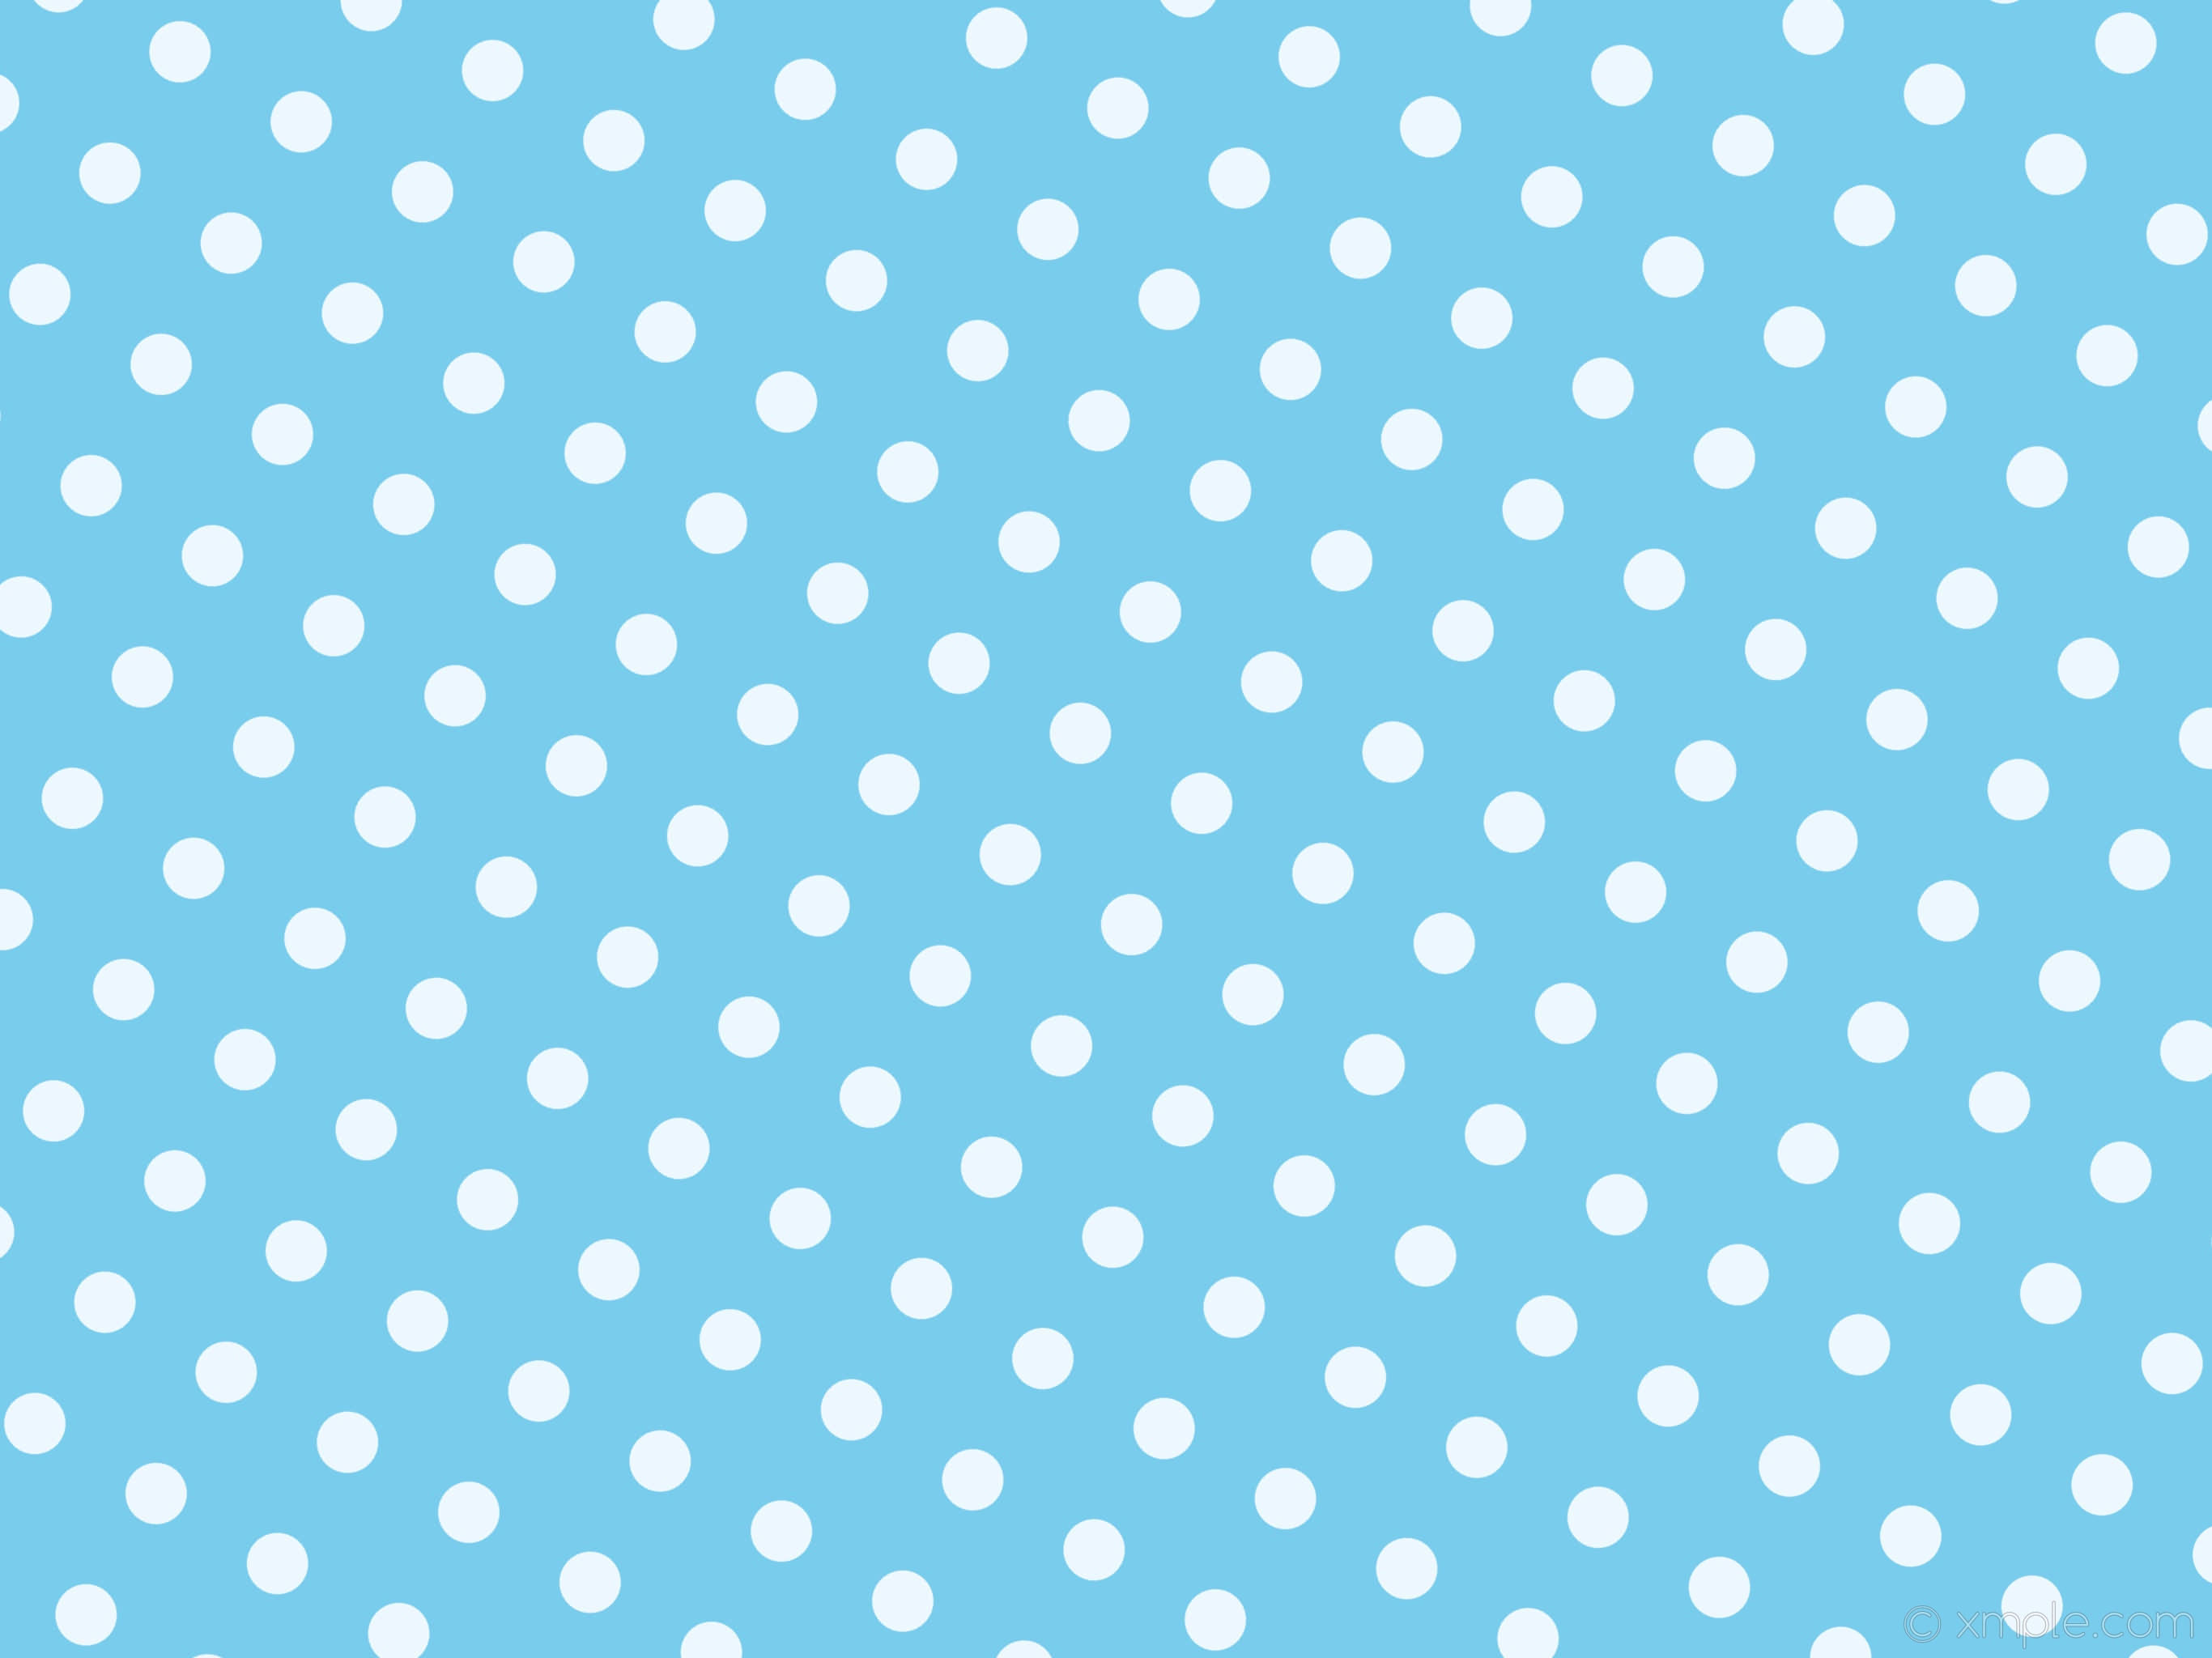 Free White & Blue Polka Dots Background - Polka Dot - HD Wallpaper 